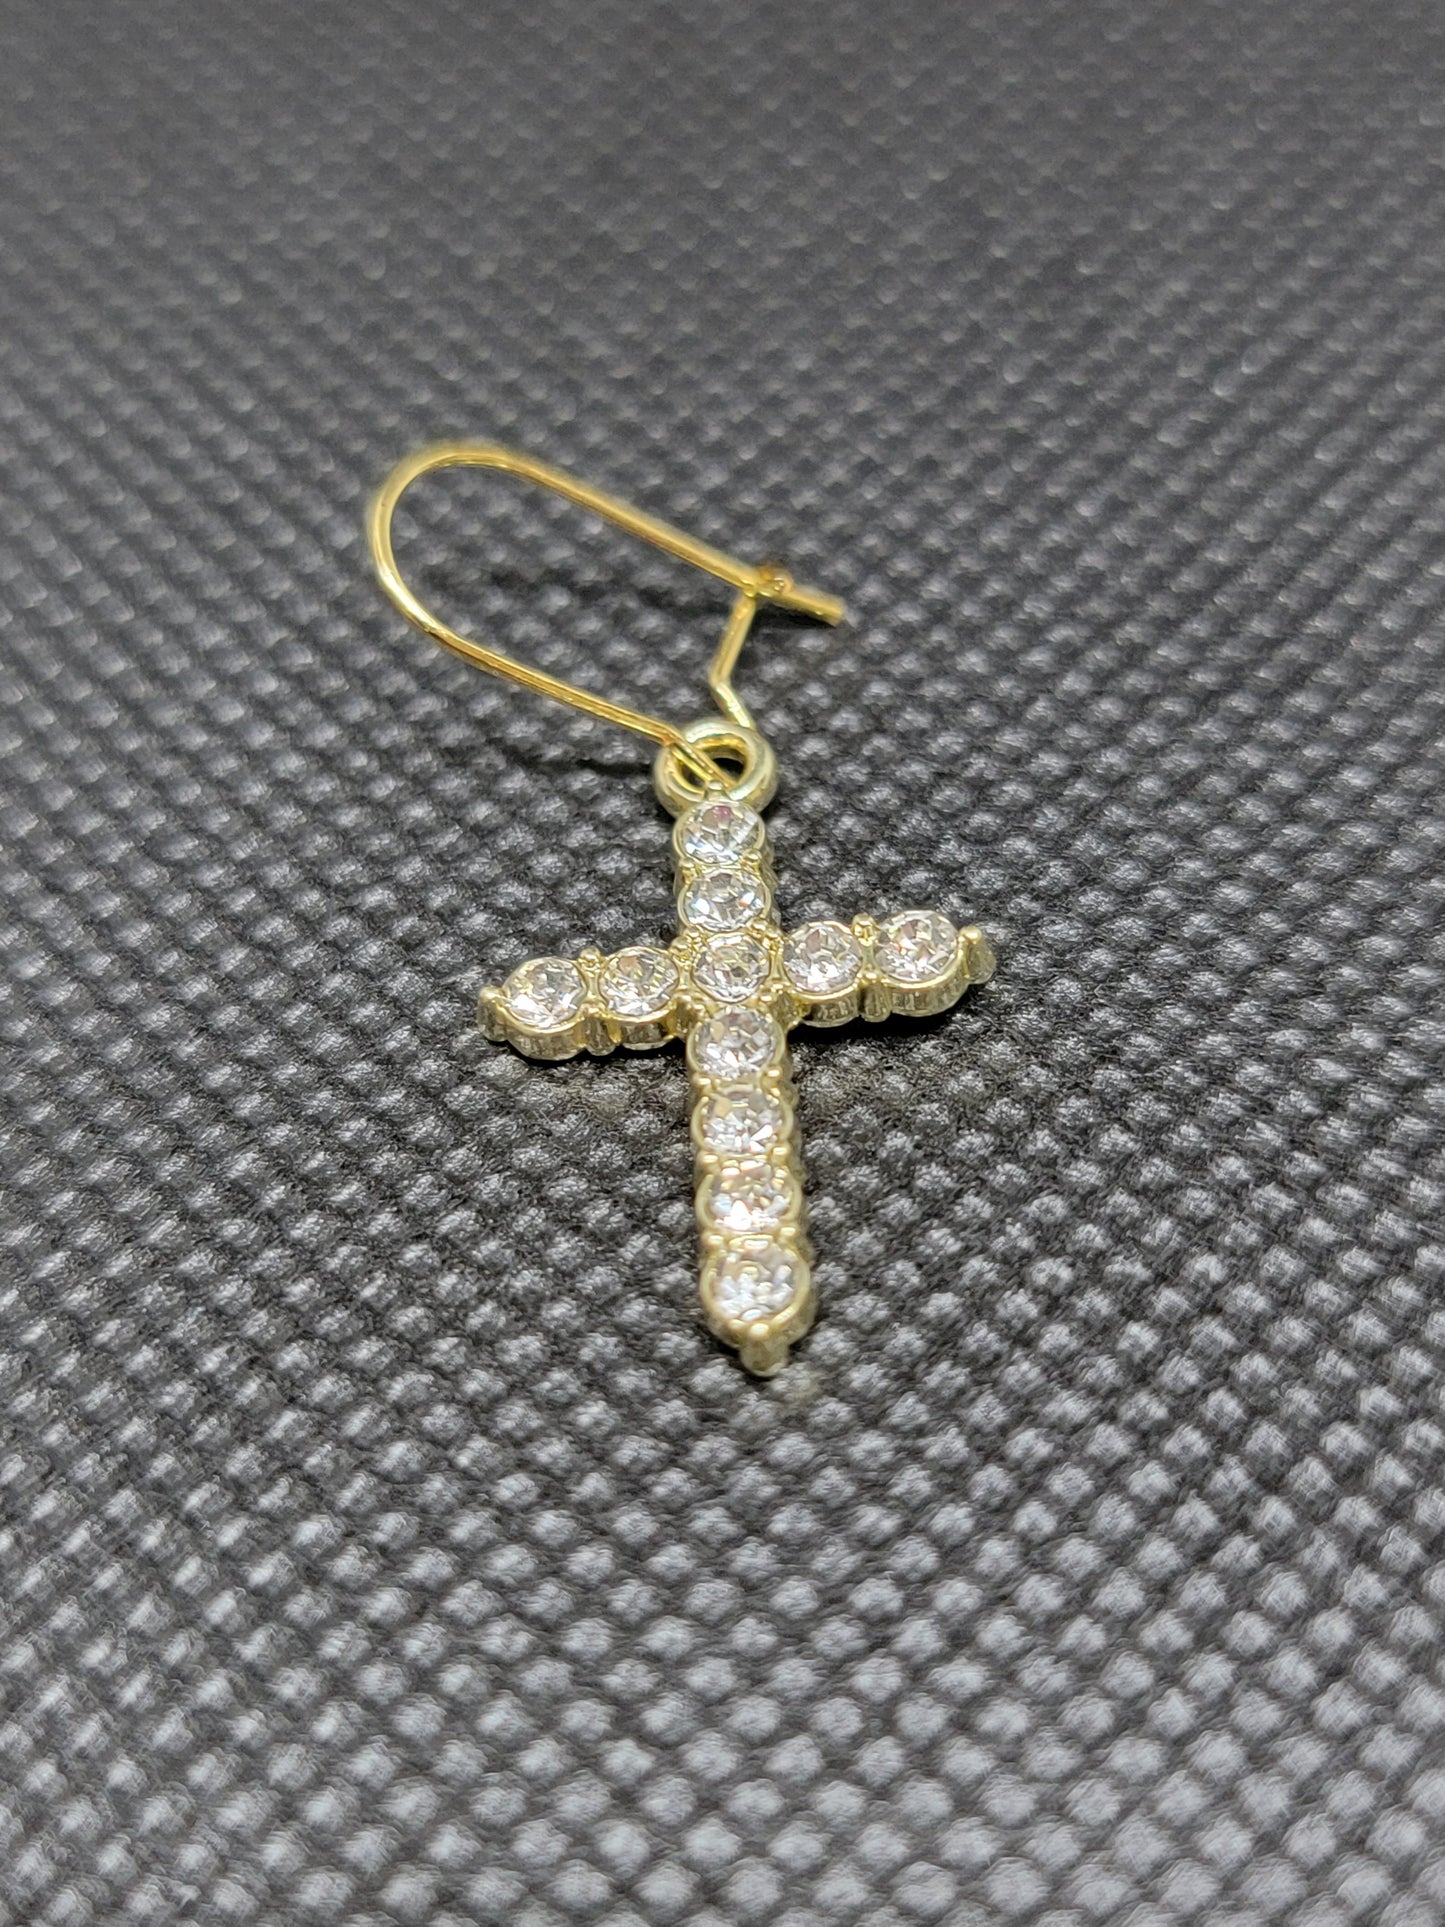 Gold cross earrings with rhinestones